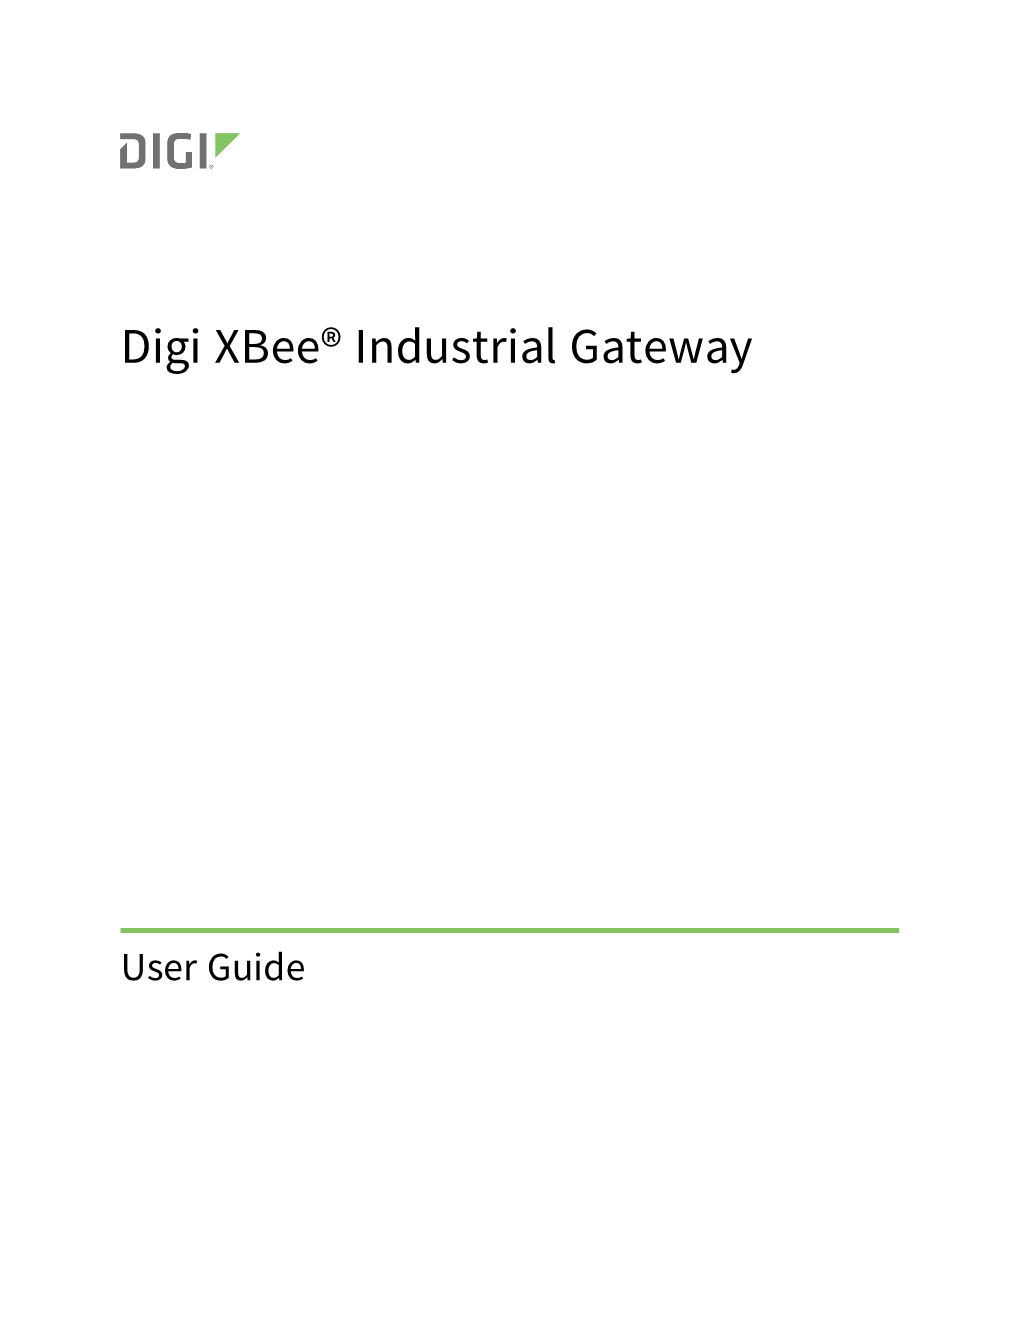 Digi Xbee Industrial Gateway User Guide